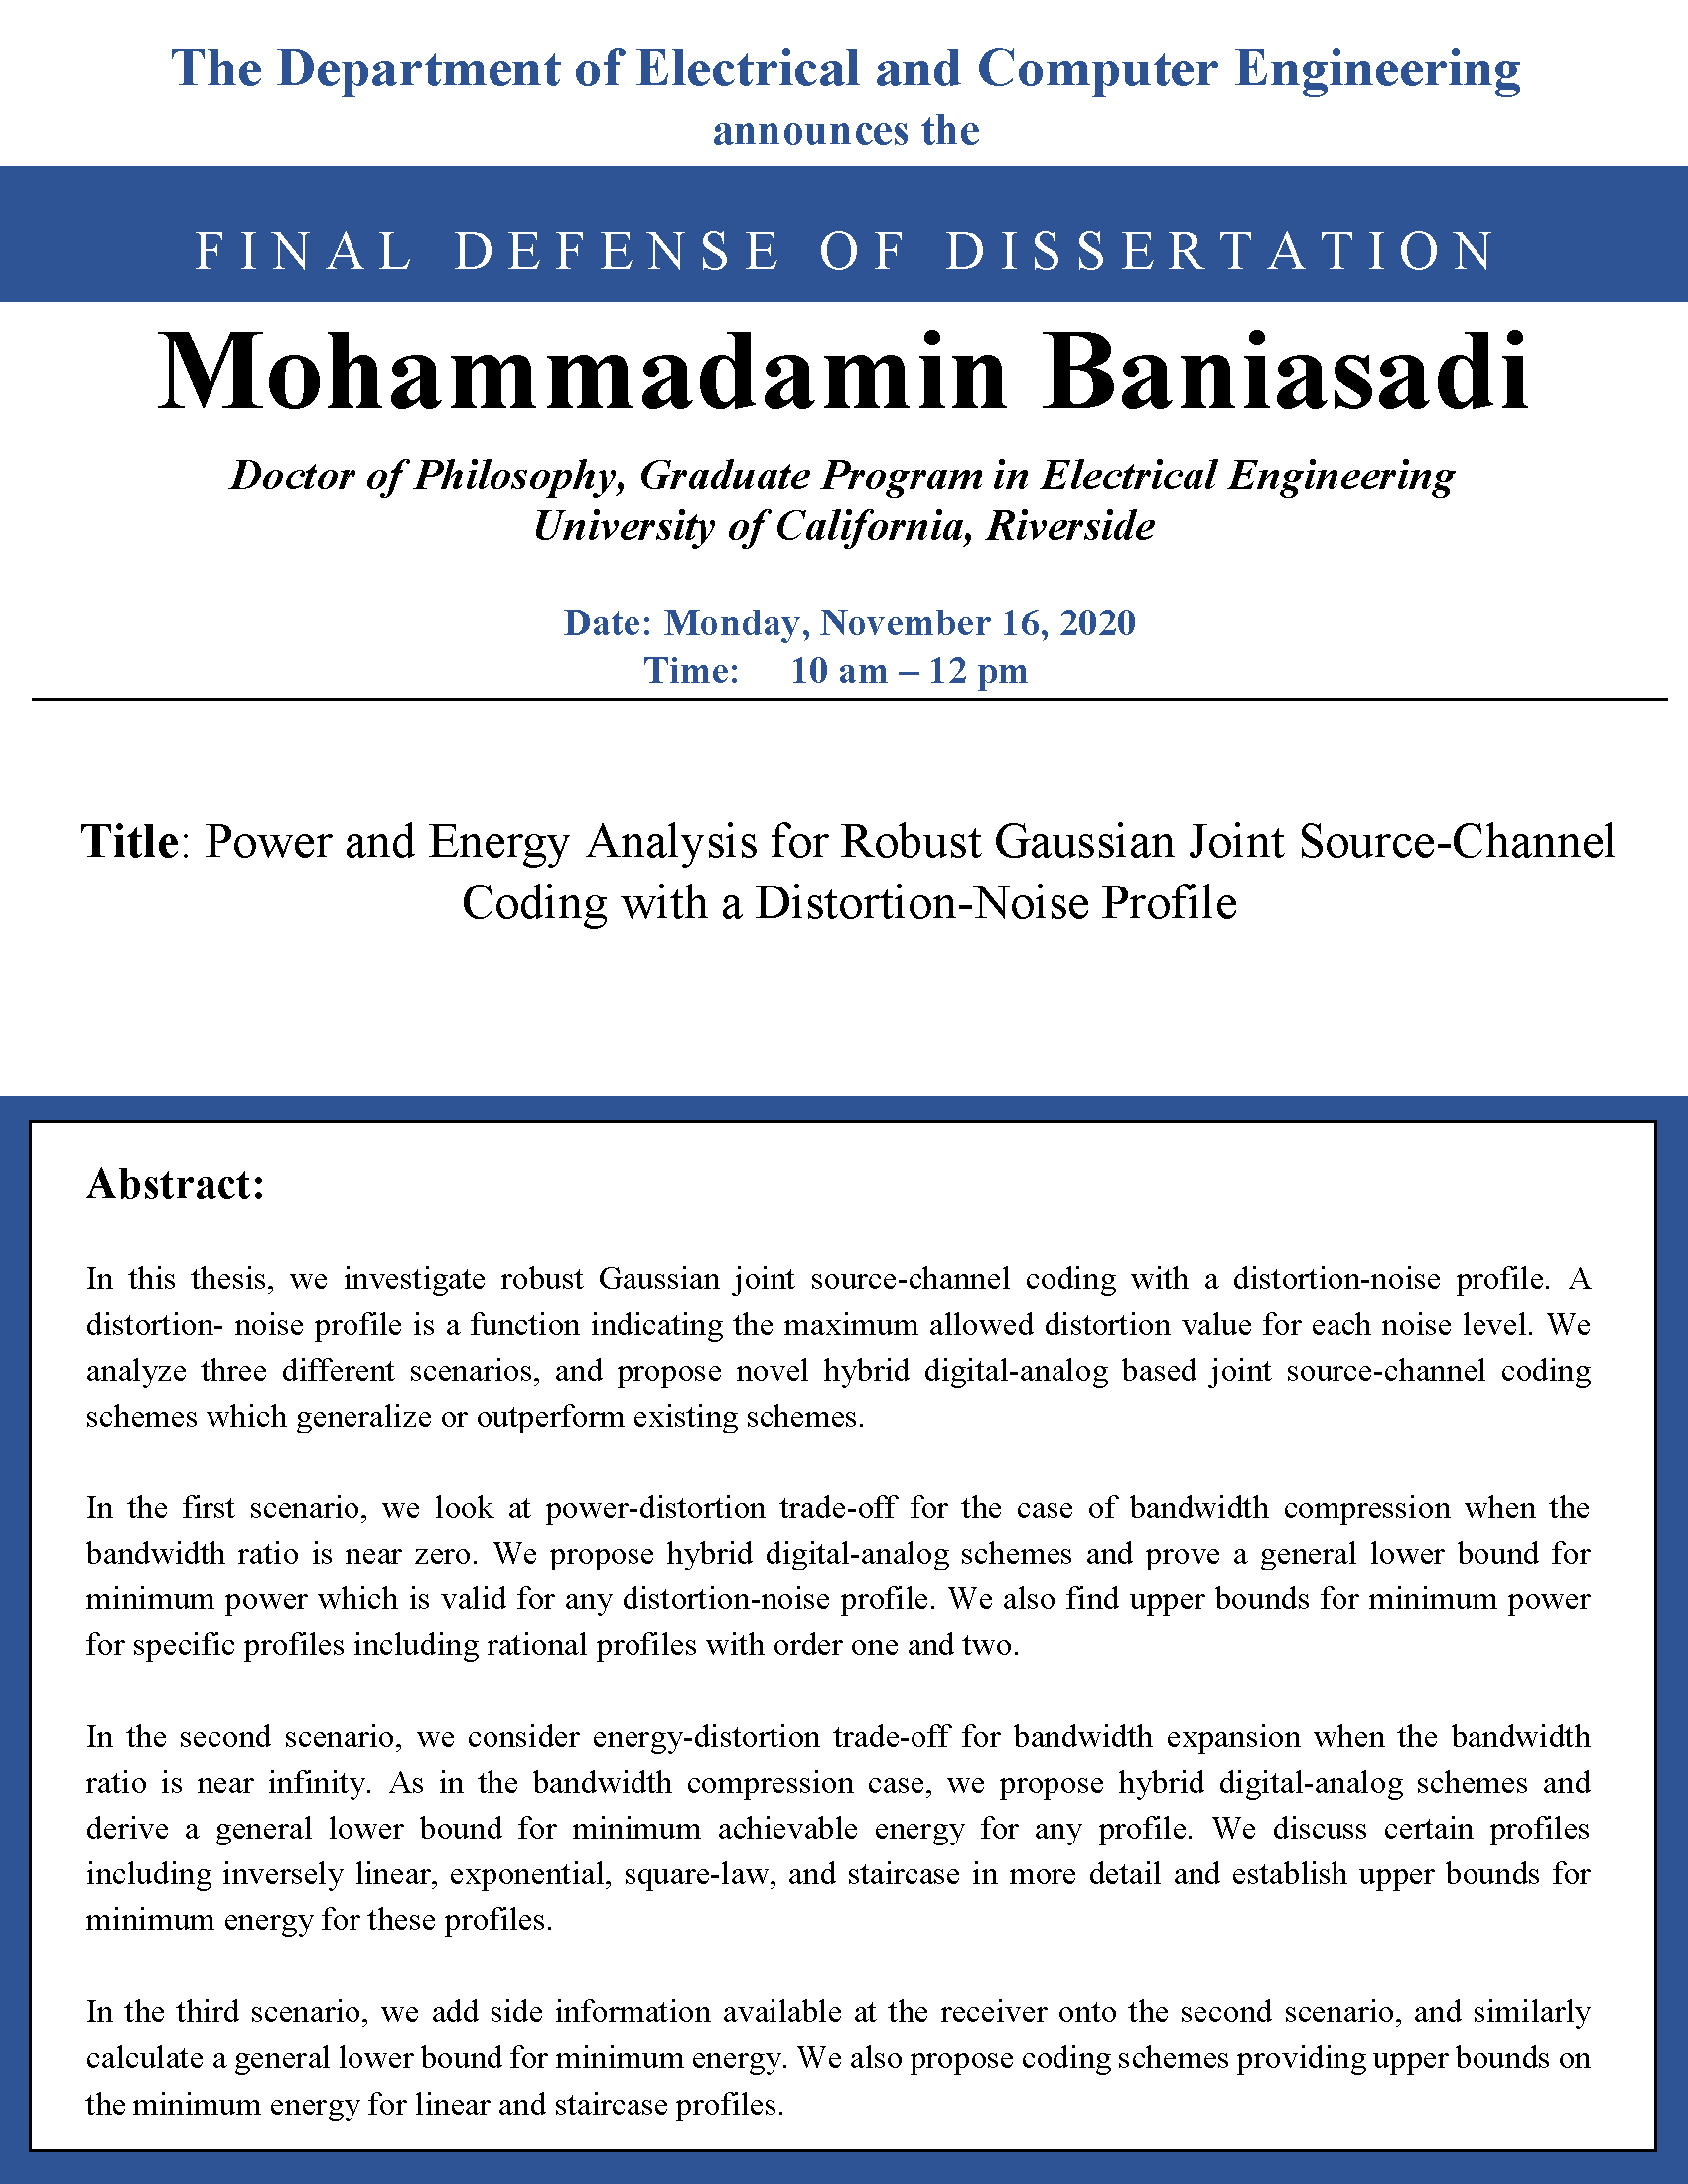 FInal Defense BANIASADI, Mohammadamin